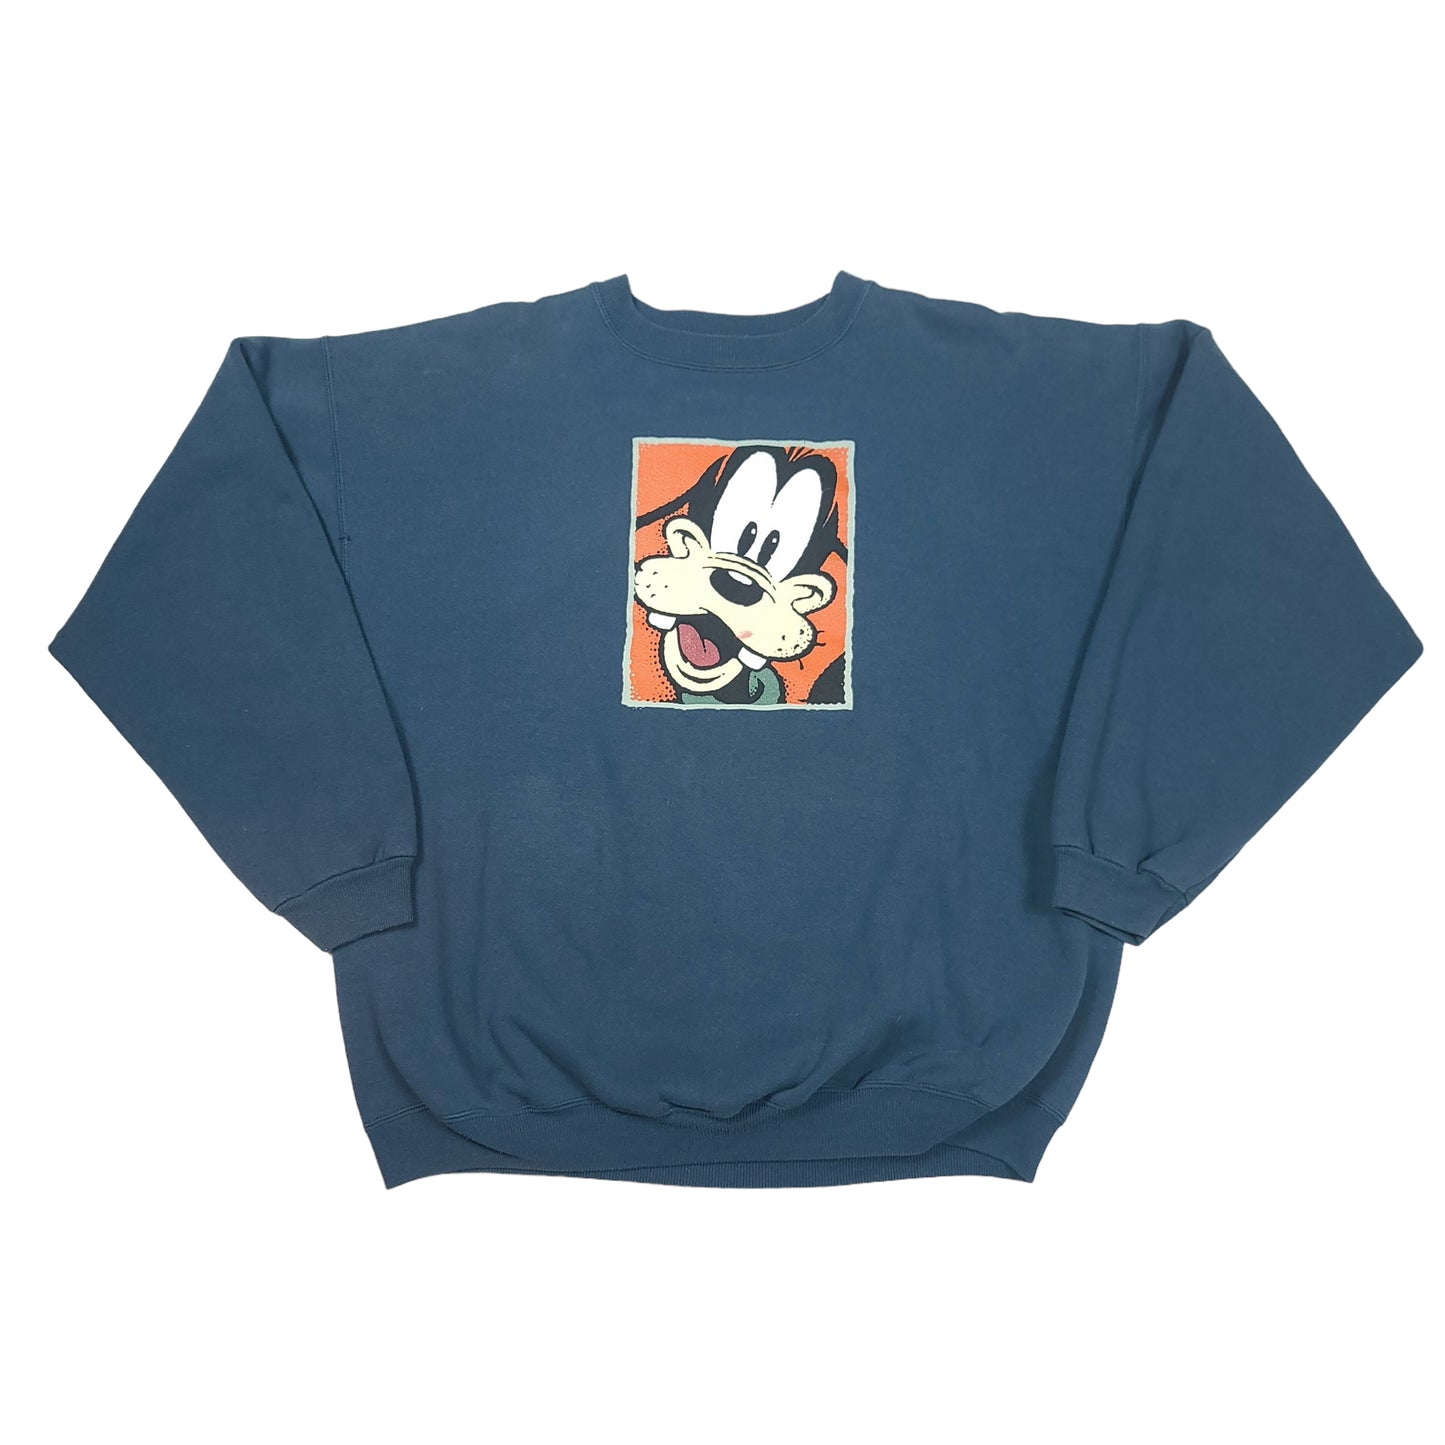 Disney Goofy Teal Blue Sweatshirt